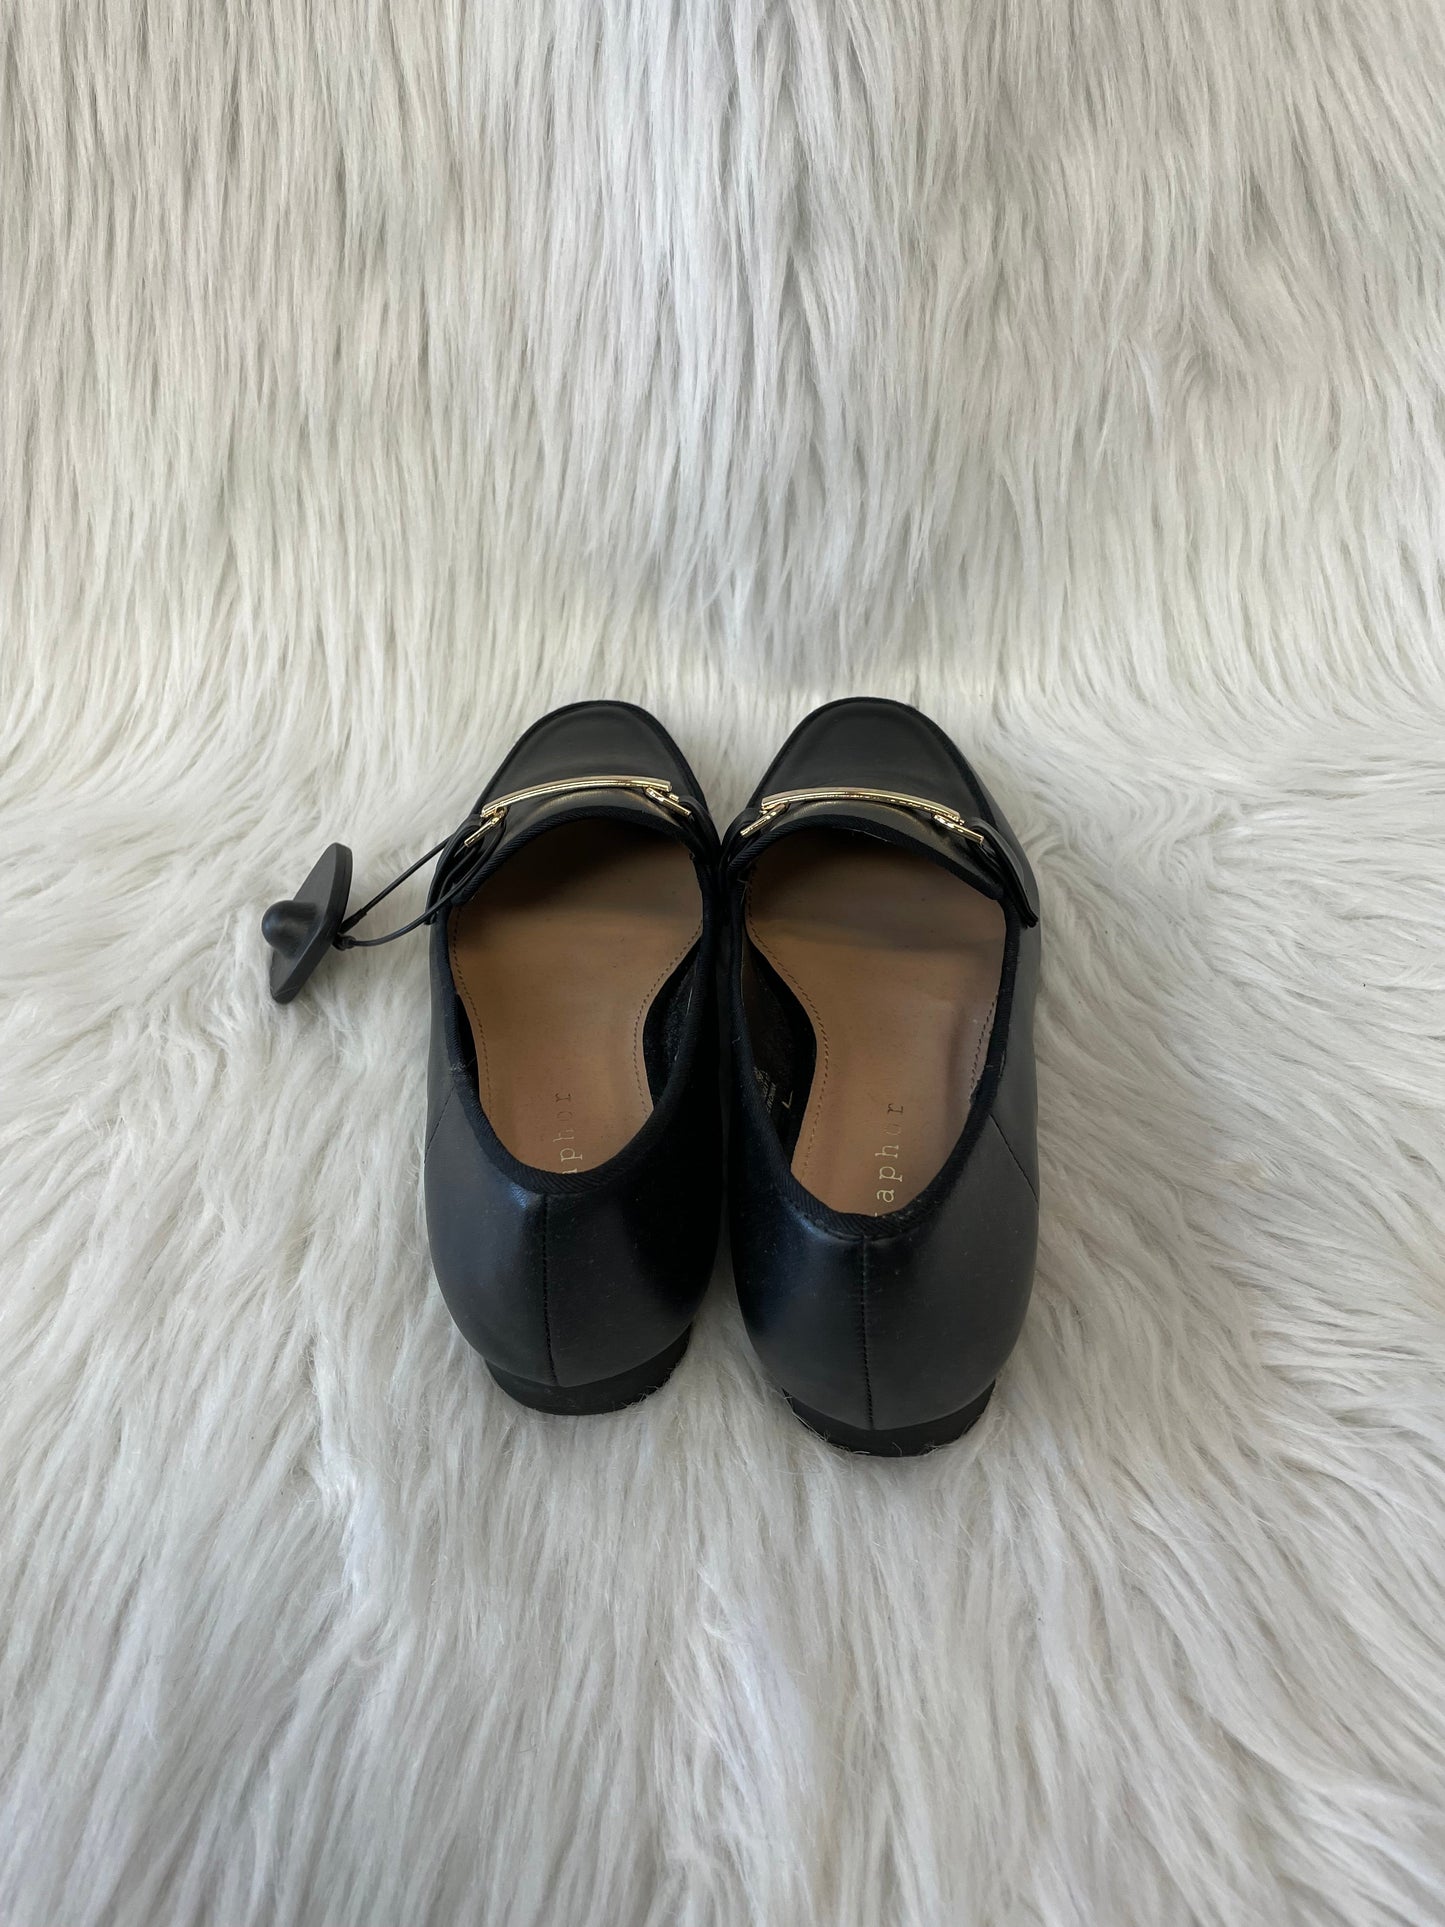 Black & Gold Shoes Flats Metaphor, Size 6